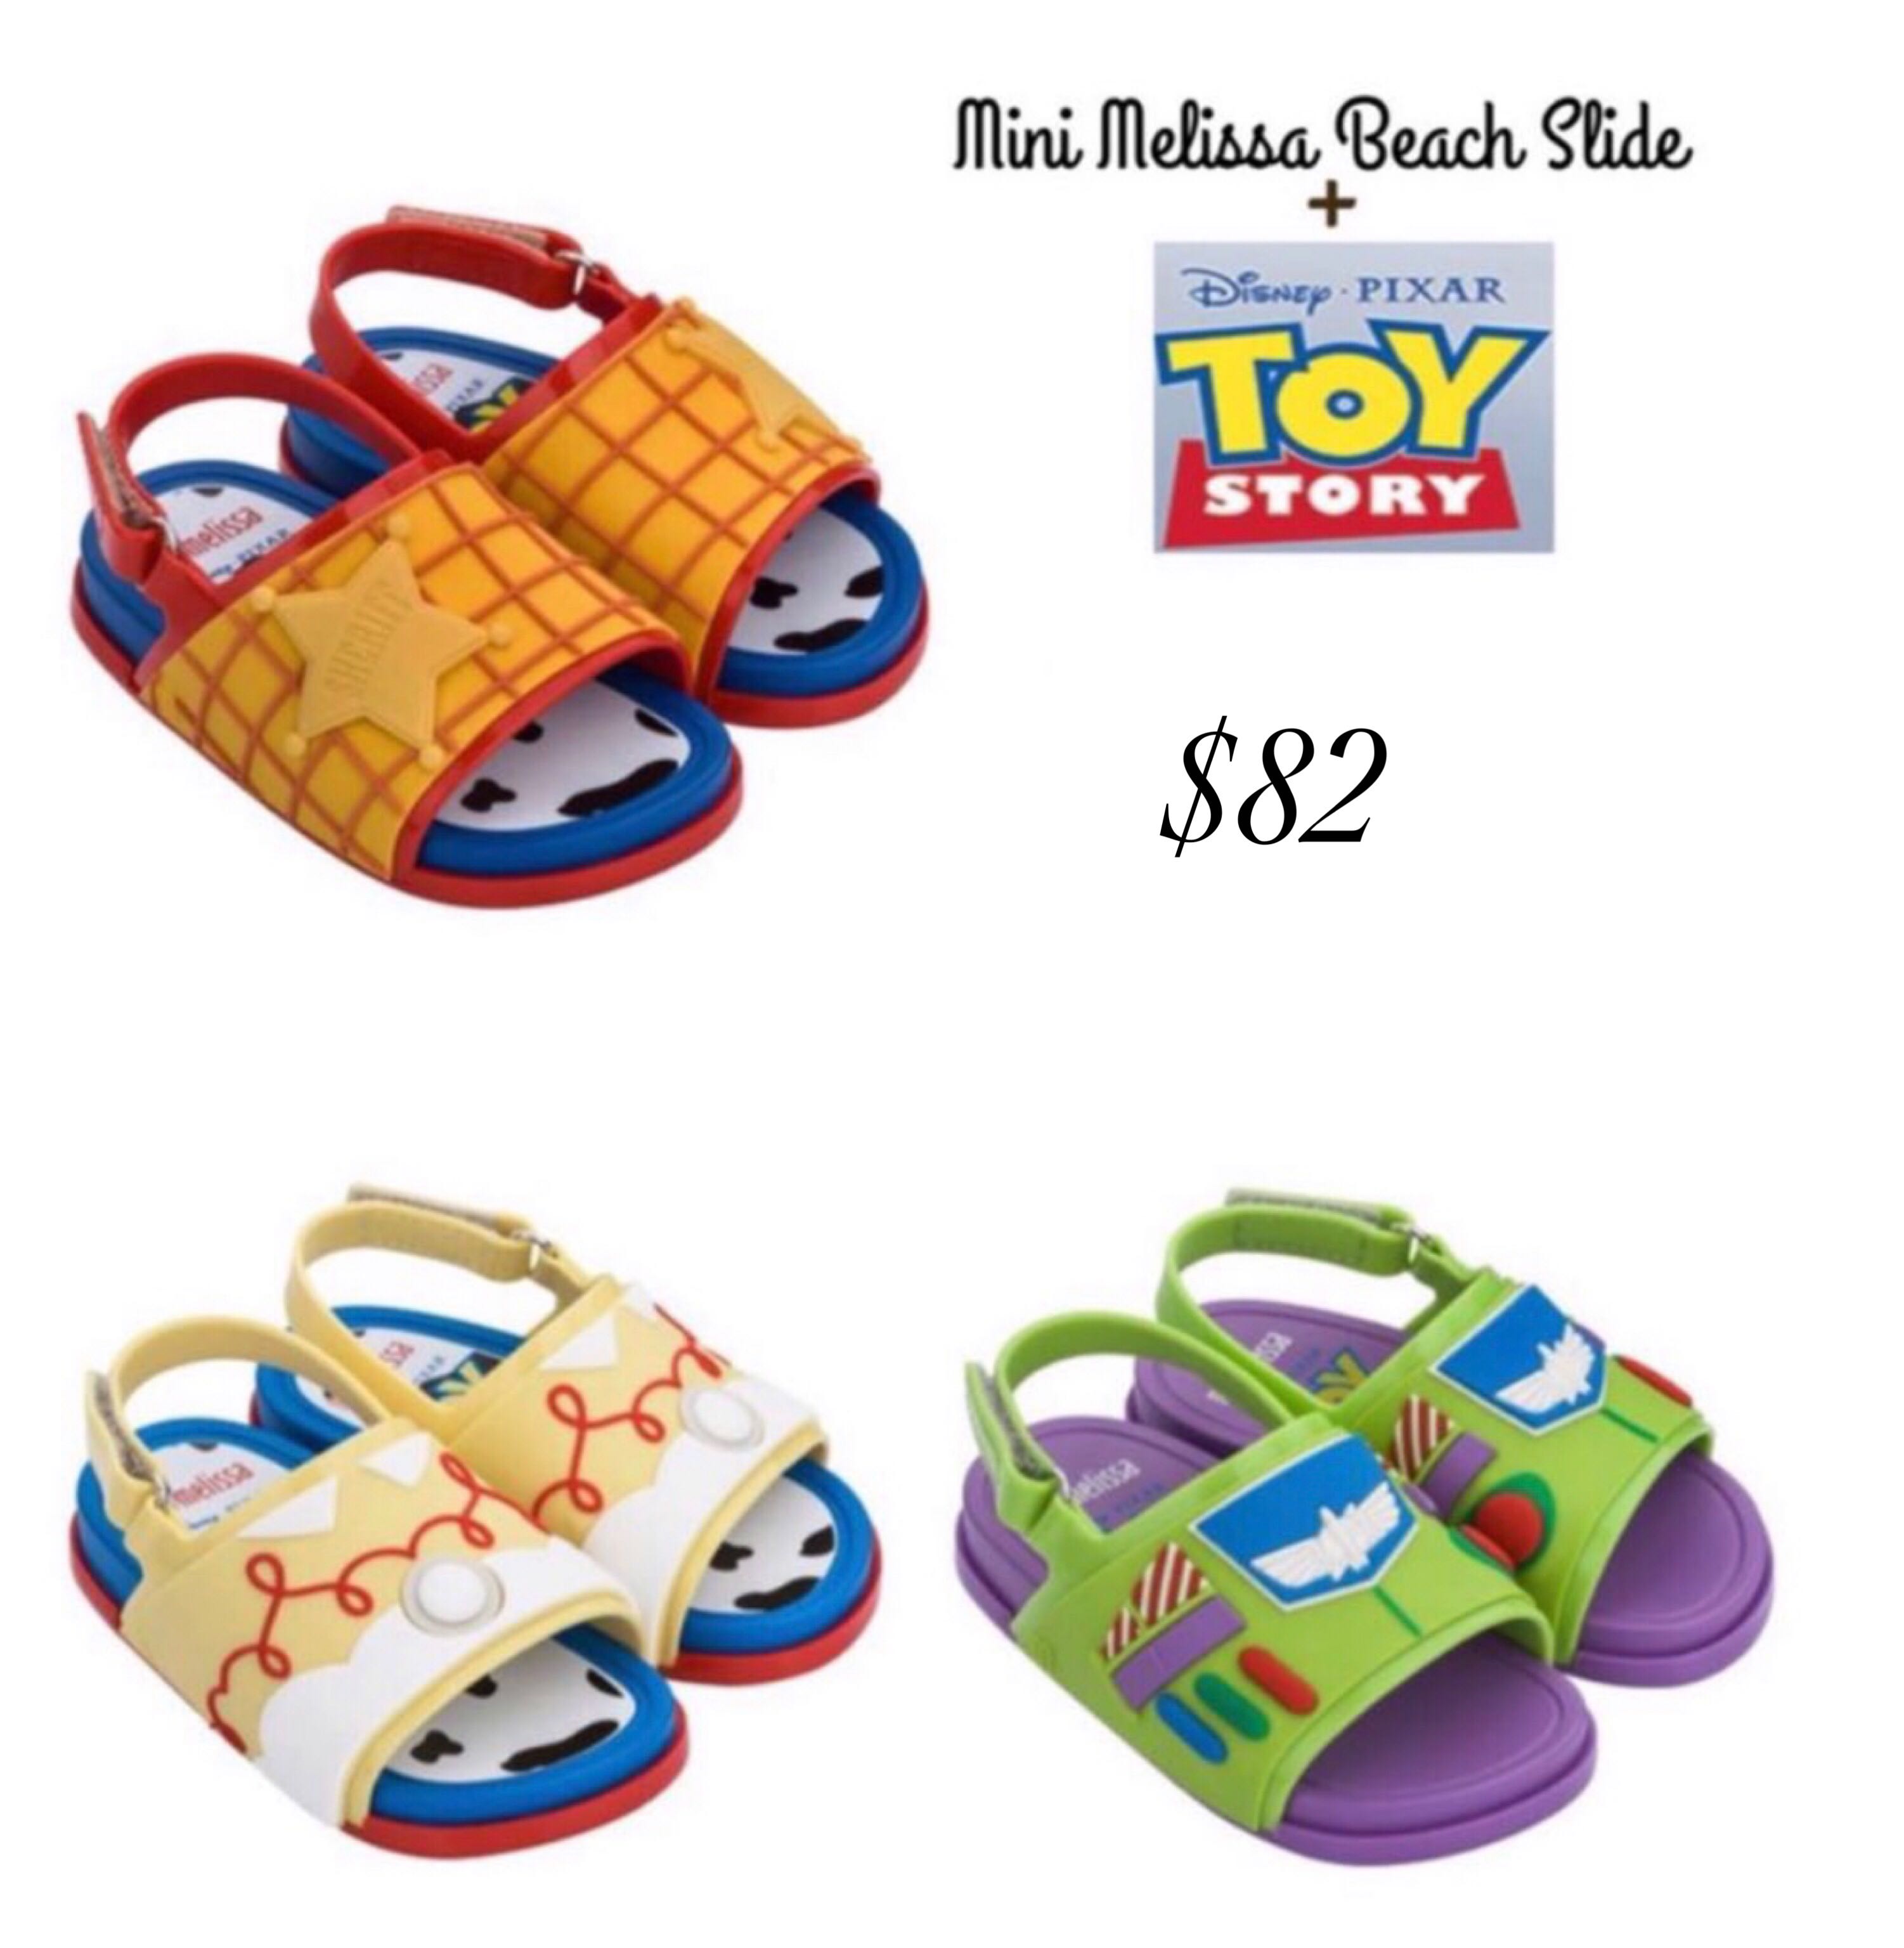 Mini Melissa Beach Slide + Toy Story 